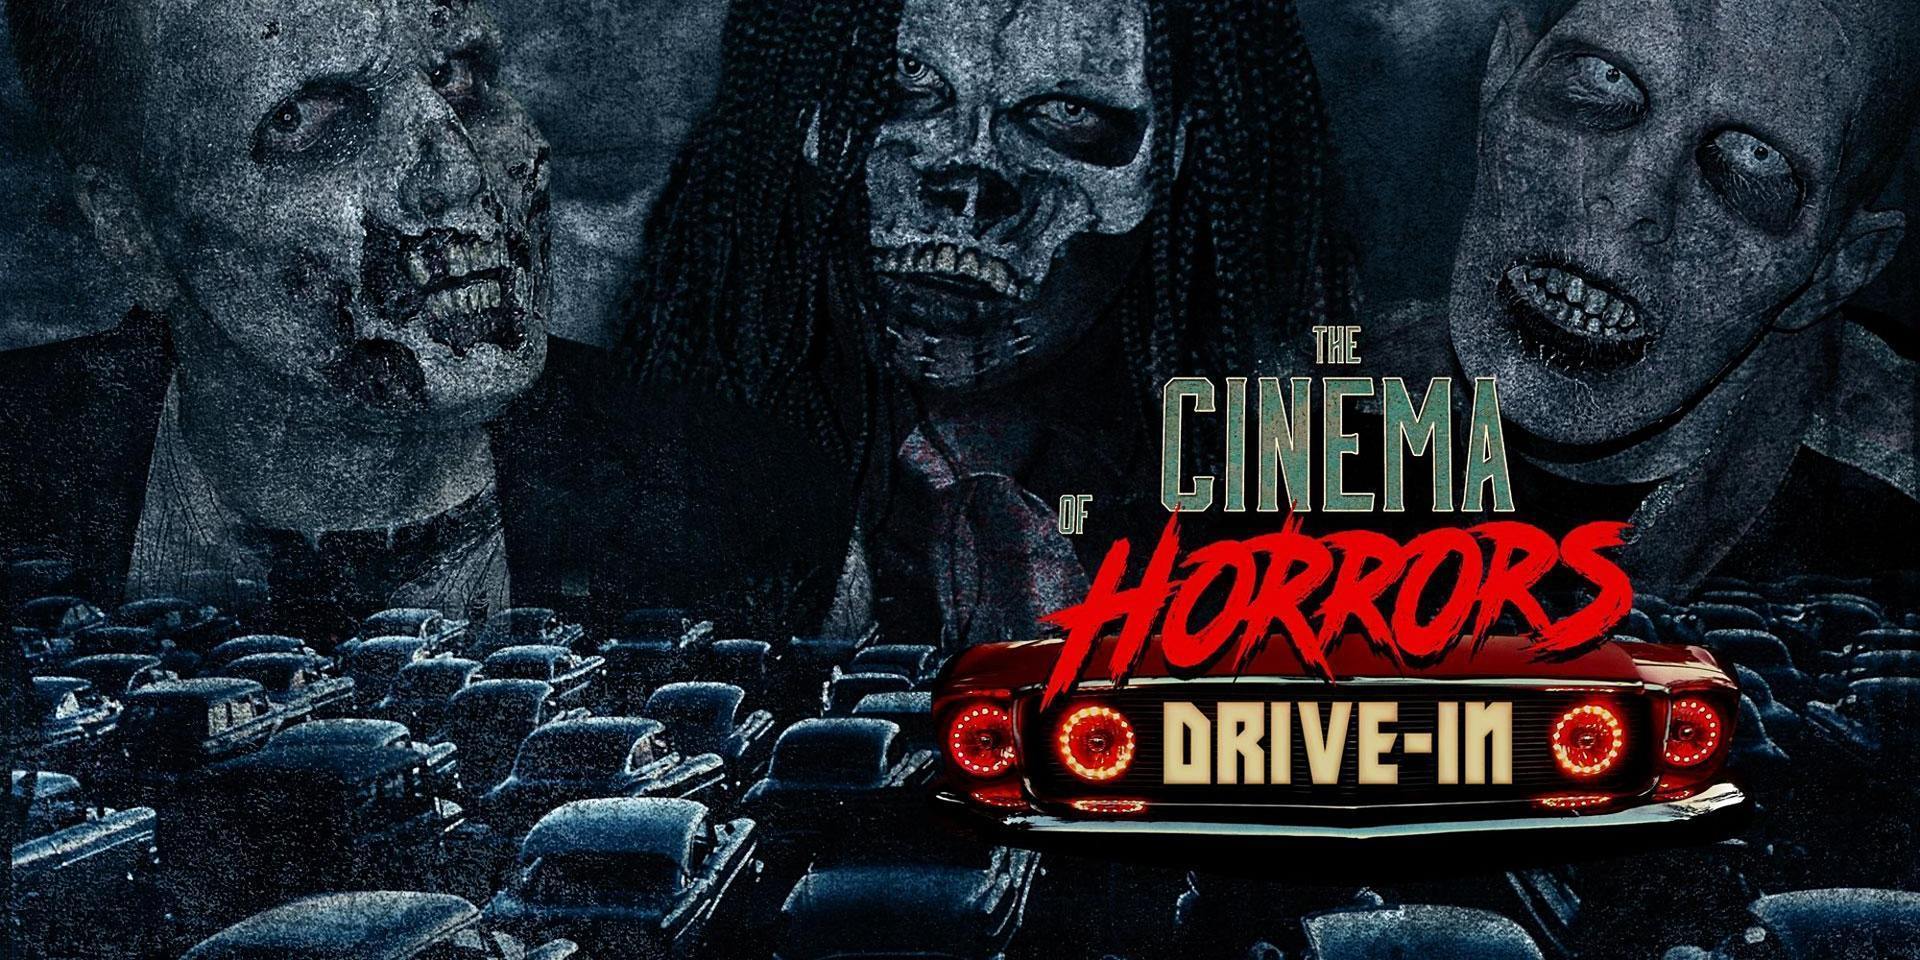 Cinema of Horrors Drive-In Experience – Clark County Fairgrounds, Ridgefield, Washington, United States